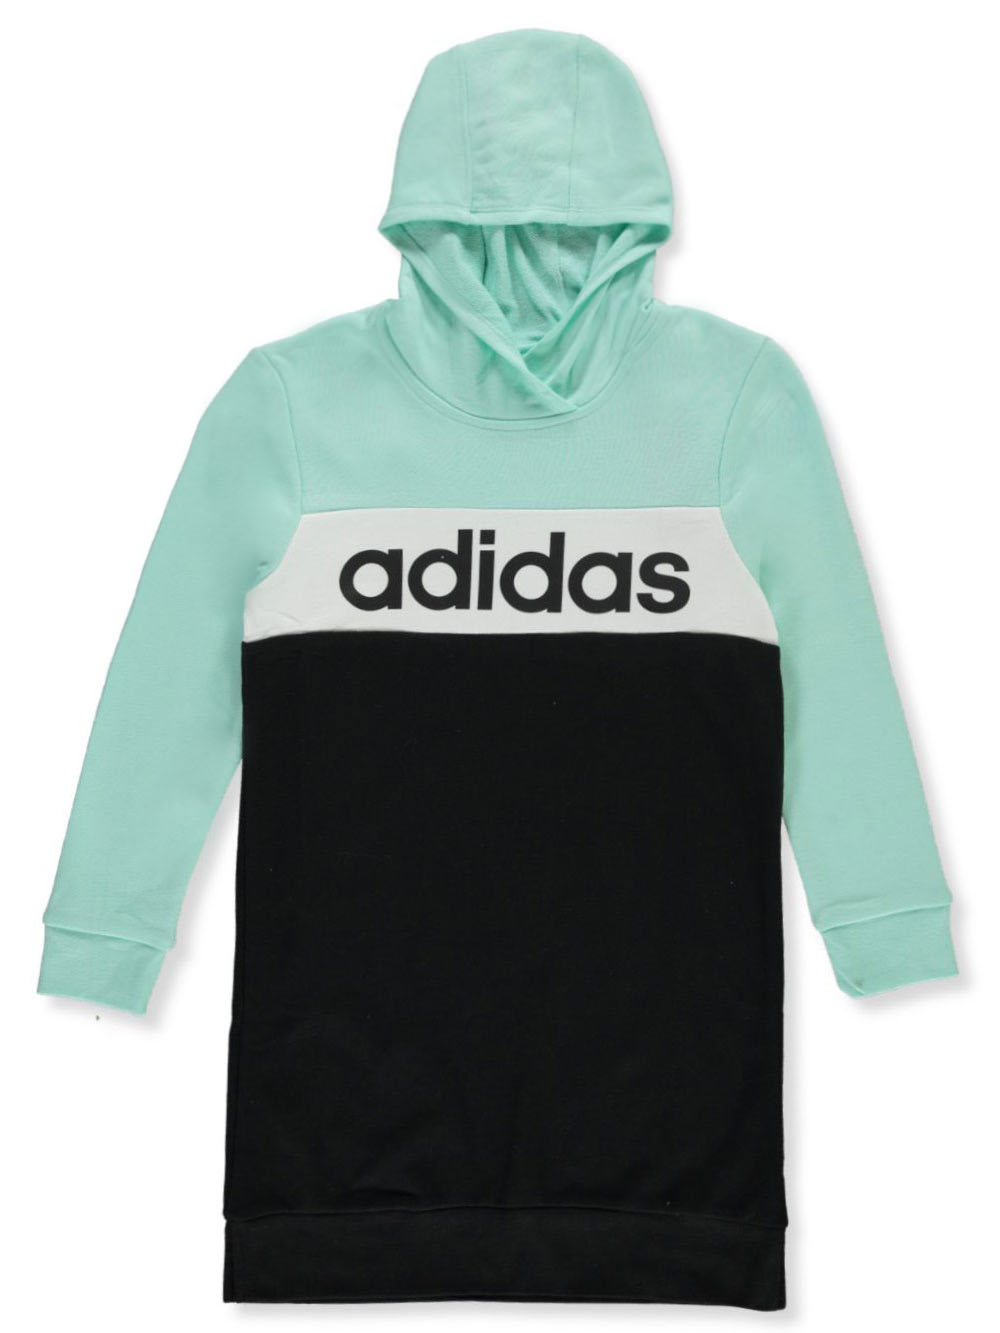 adidas hoodie dress